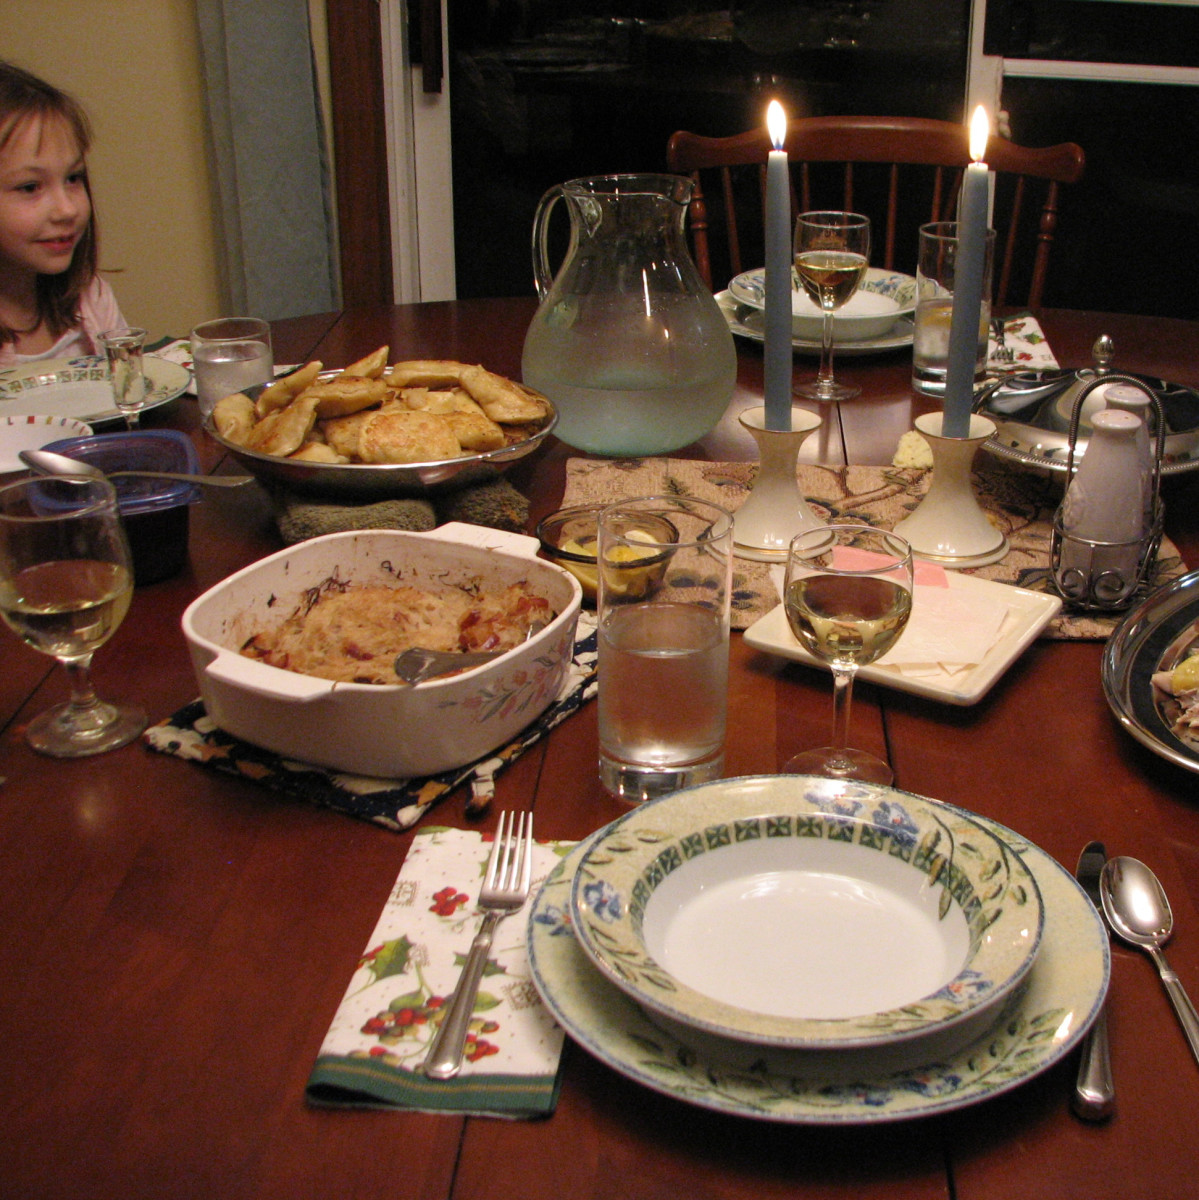 Pierogi: A Tradition for the Polish Wigilia (Christmas Eve) Meal